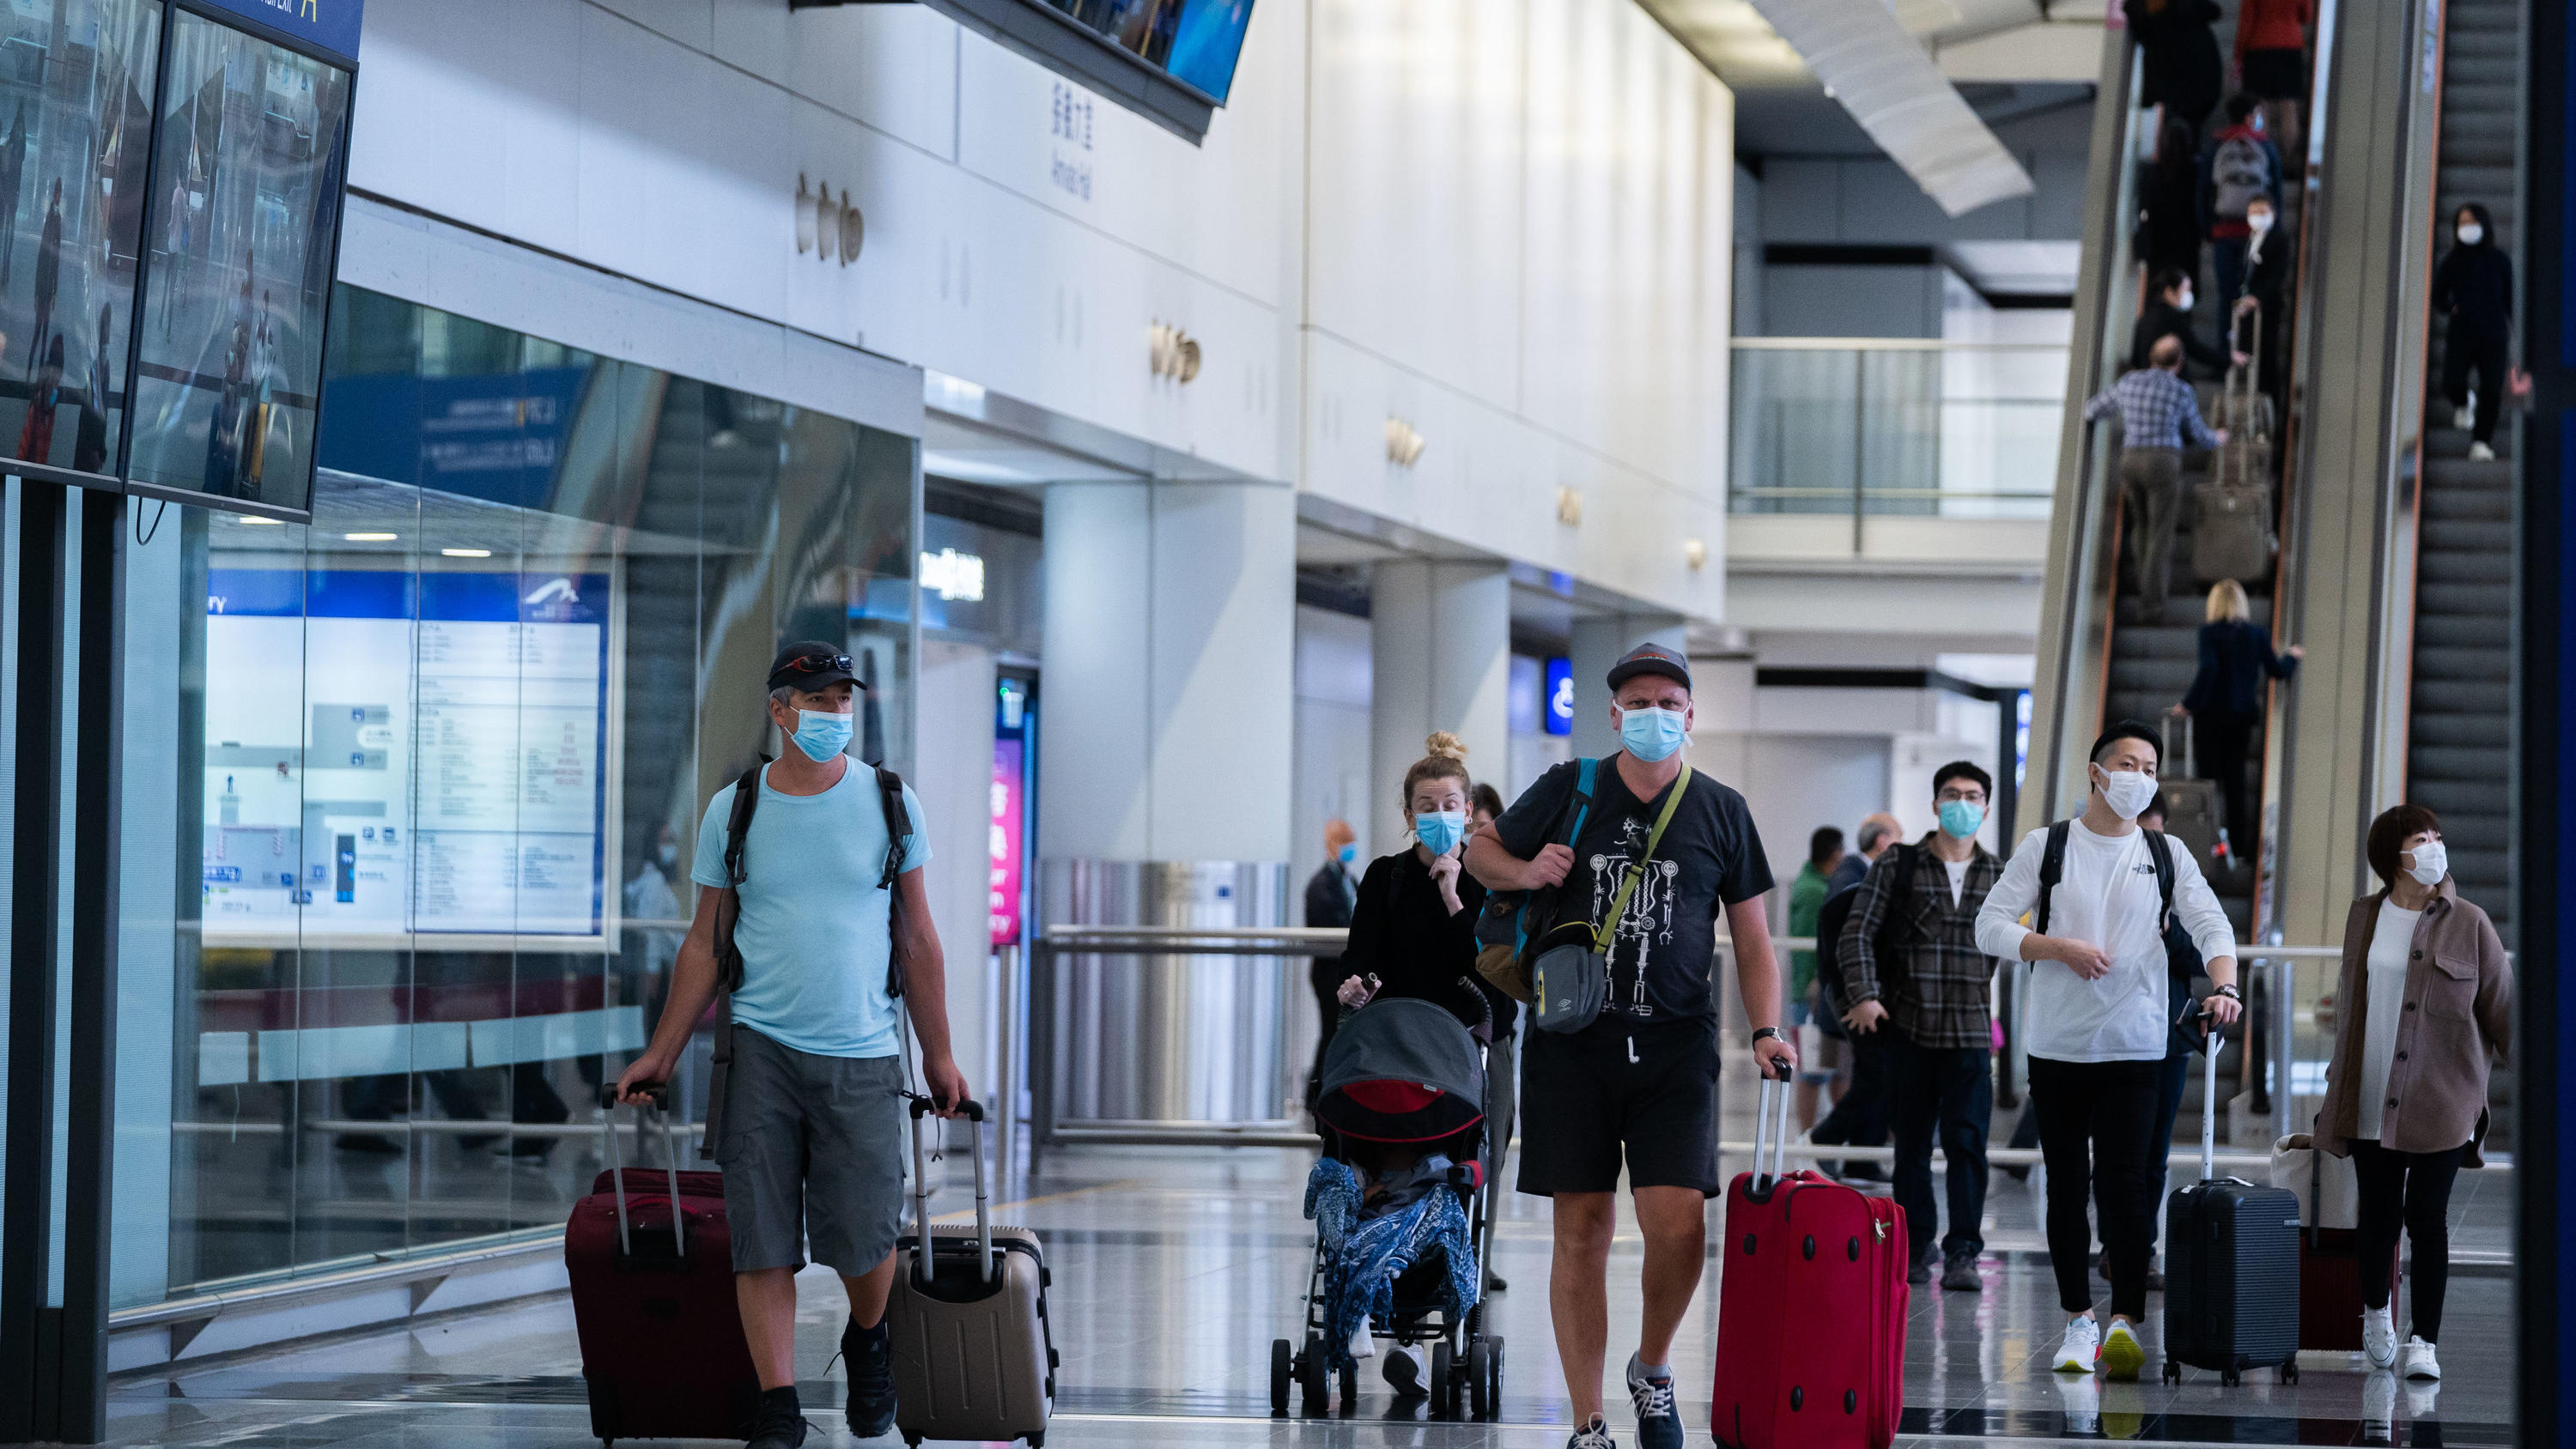 08.02.2020, China, Hongkong: Reisende mit Mundschutz verlassen den Ankunftsbereich des Hong Kong International Airport. Foto: Geovien So/SOPA Images via ZUMA Wire/dpa +++ dpa-Bildfunk +++